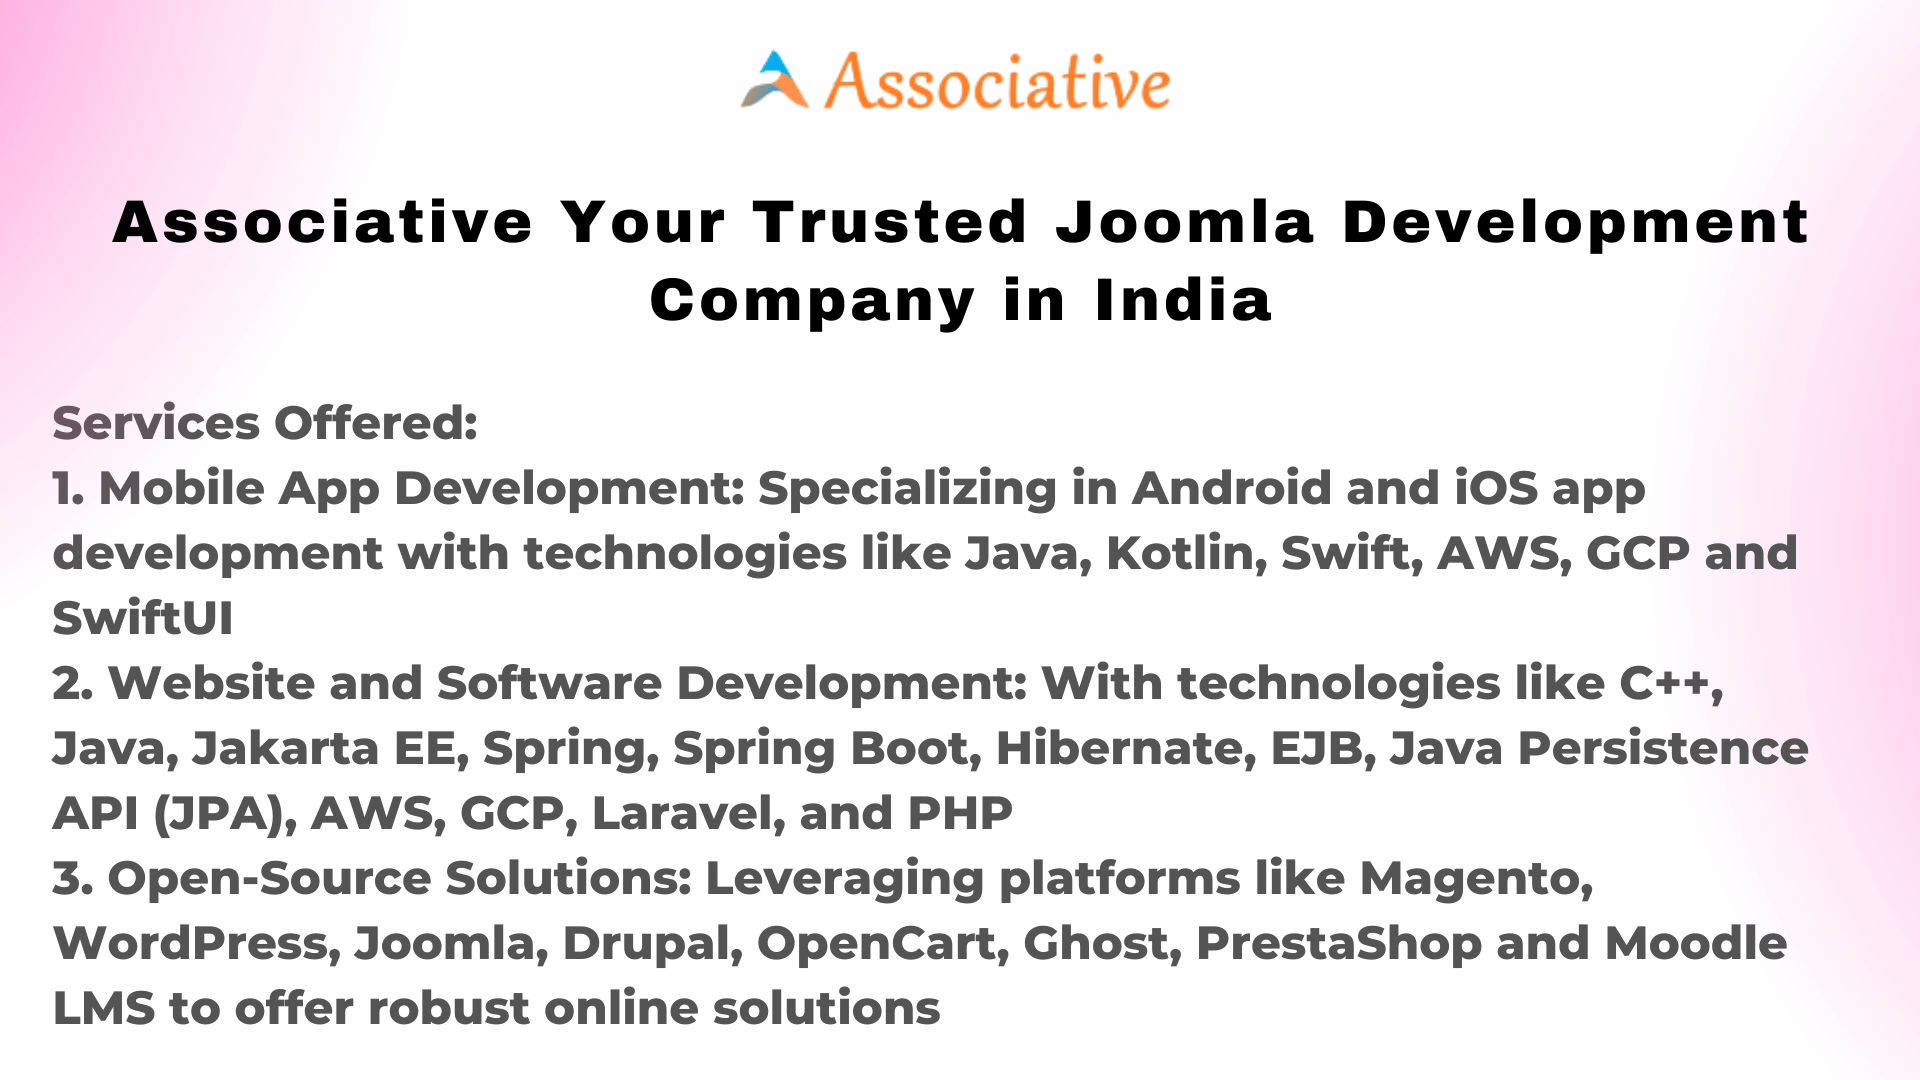 Associative Your Trusted Joomla Development Company in India